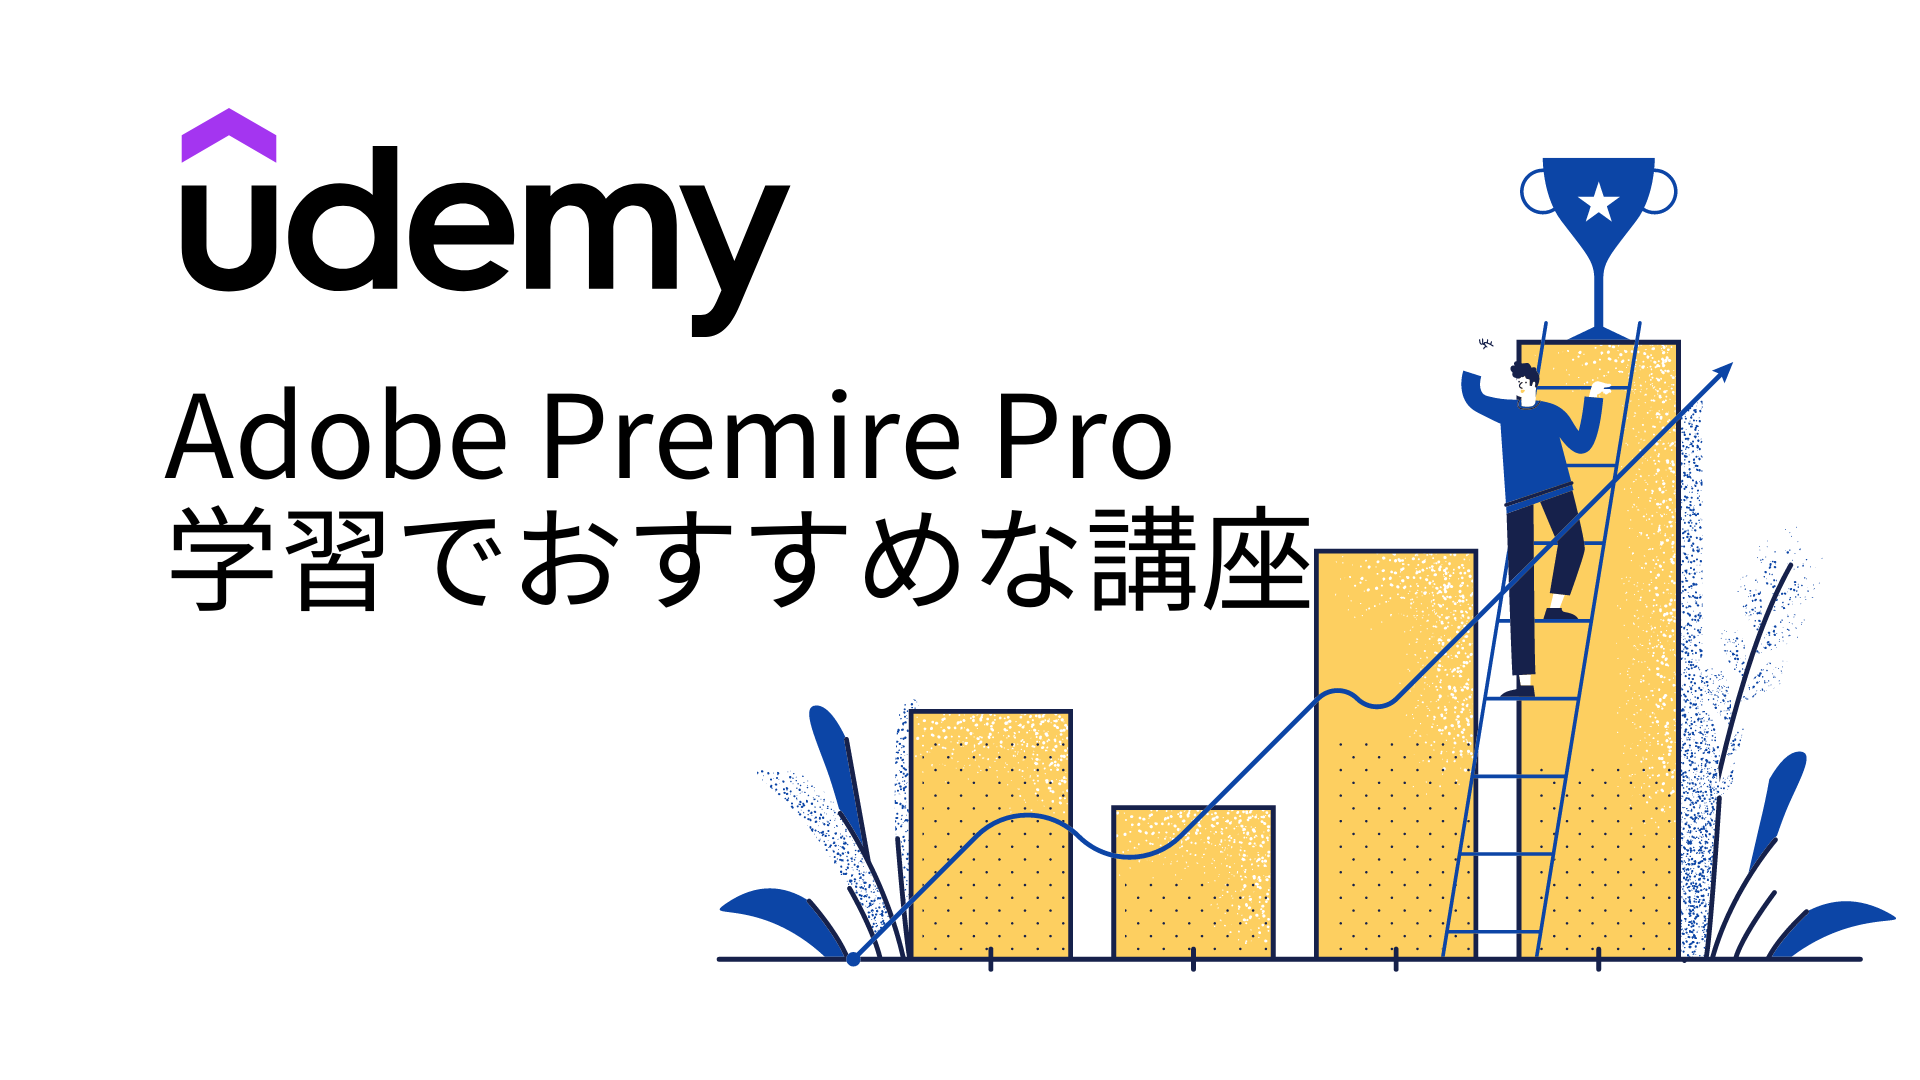 Udemy Adobe Premiere Pro おすすめ講座